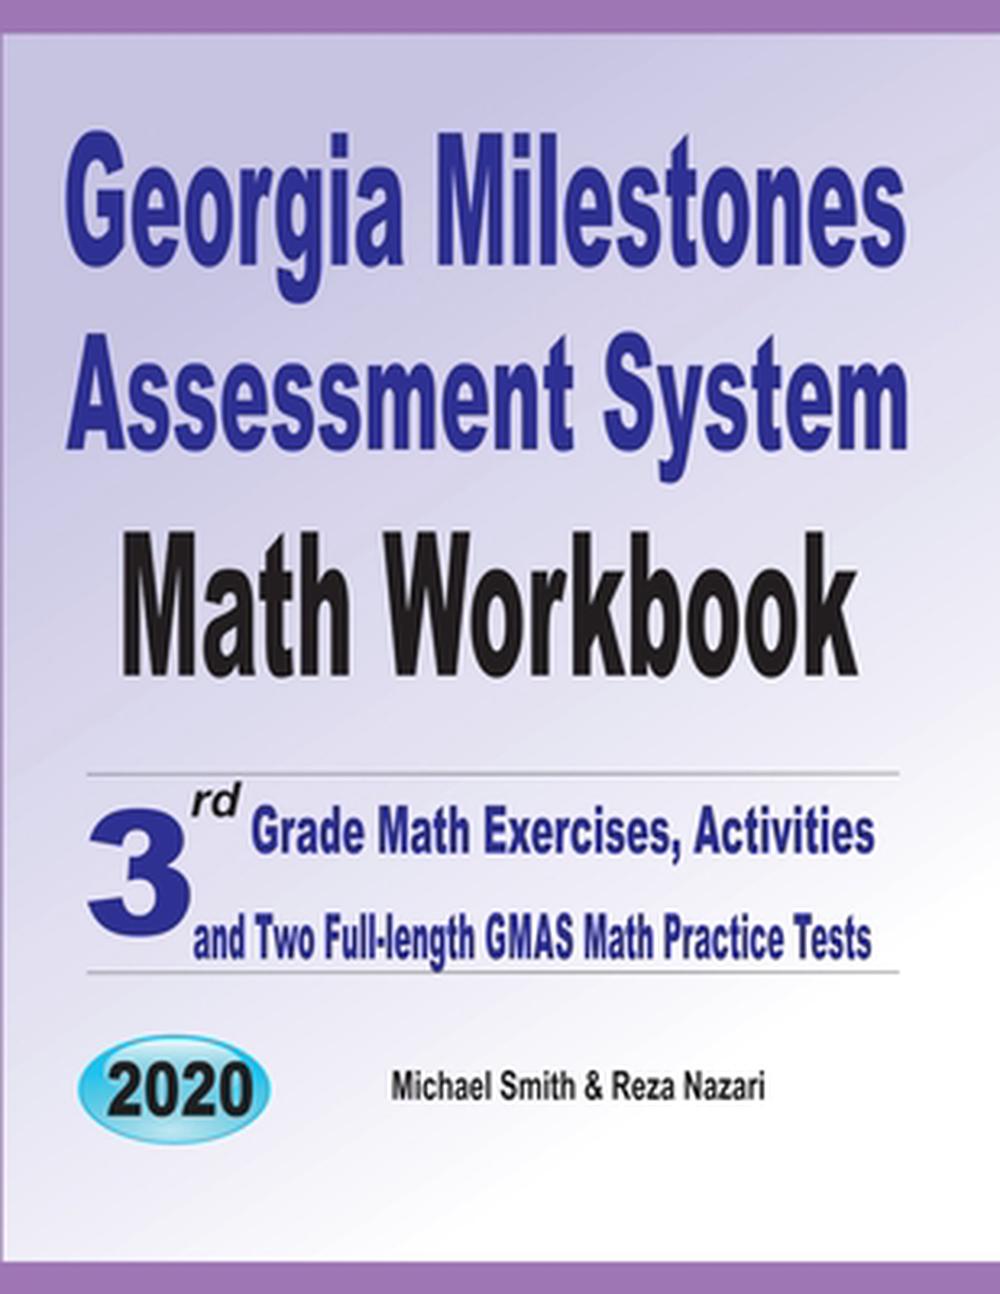 georgia-milestones-assessment-system-math-workbook-3rd-grade-math-exercises-ac-9781646126842